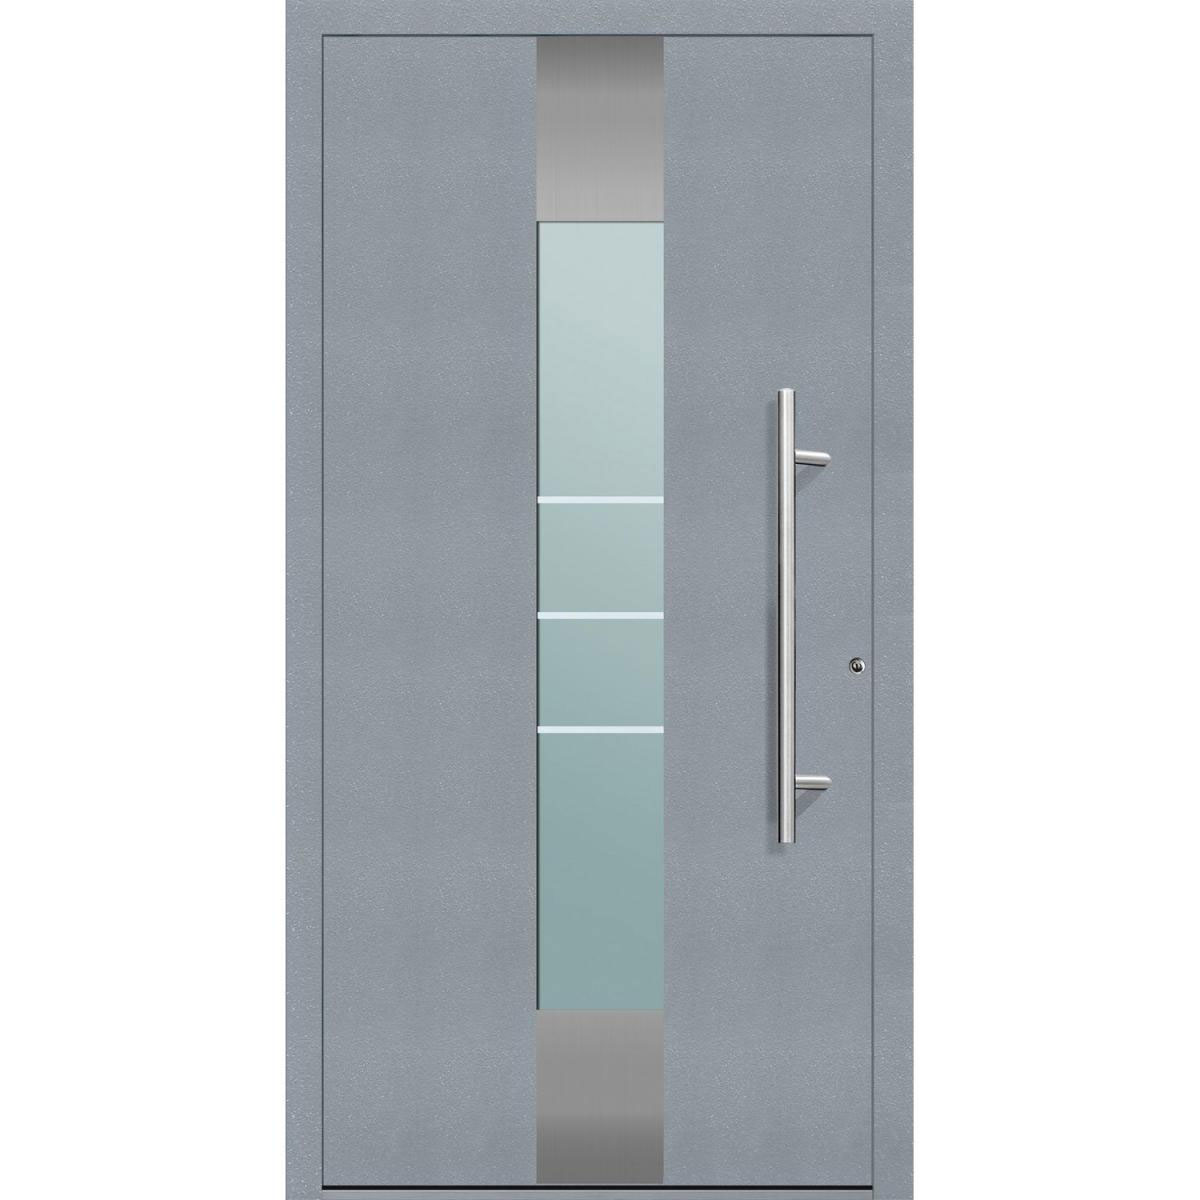 Aluminium Sicherheits-Haustür „Catania Exklusiv“, 75mm, grau, 110x210 cm, Anschlag rechts, inkl. Griffset